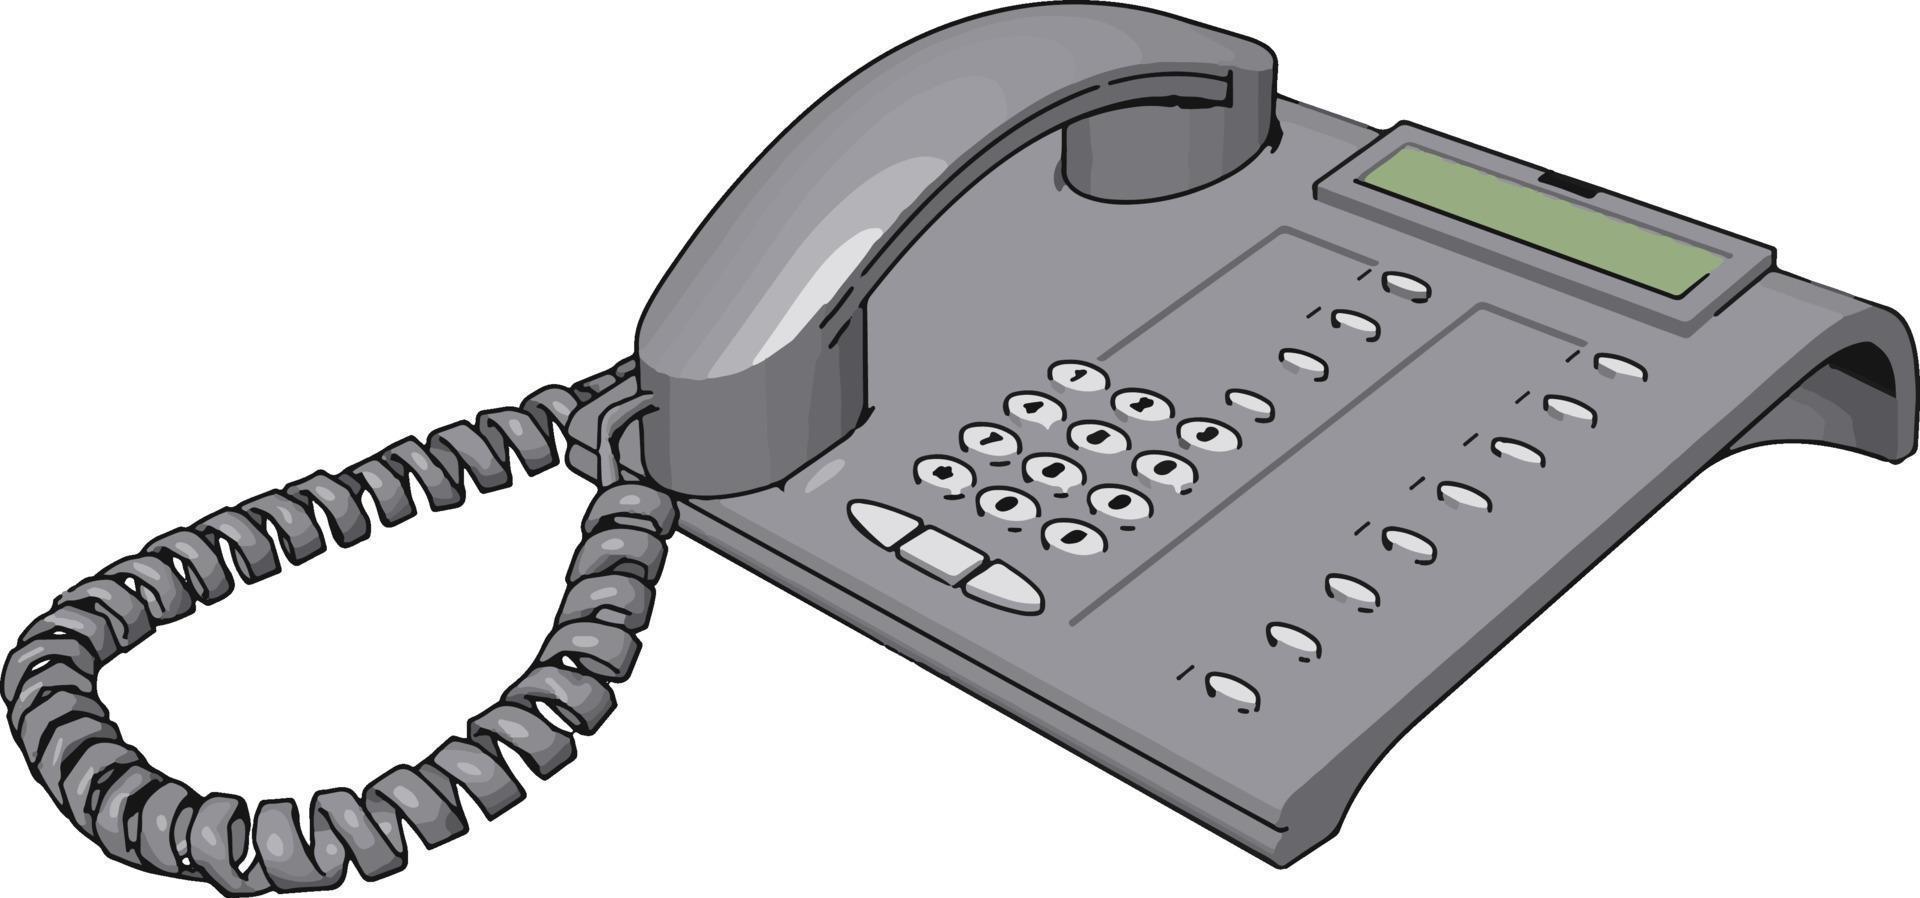 Teléfono de plata, ilustración, vector sobre fondo blanco.